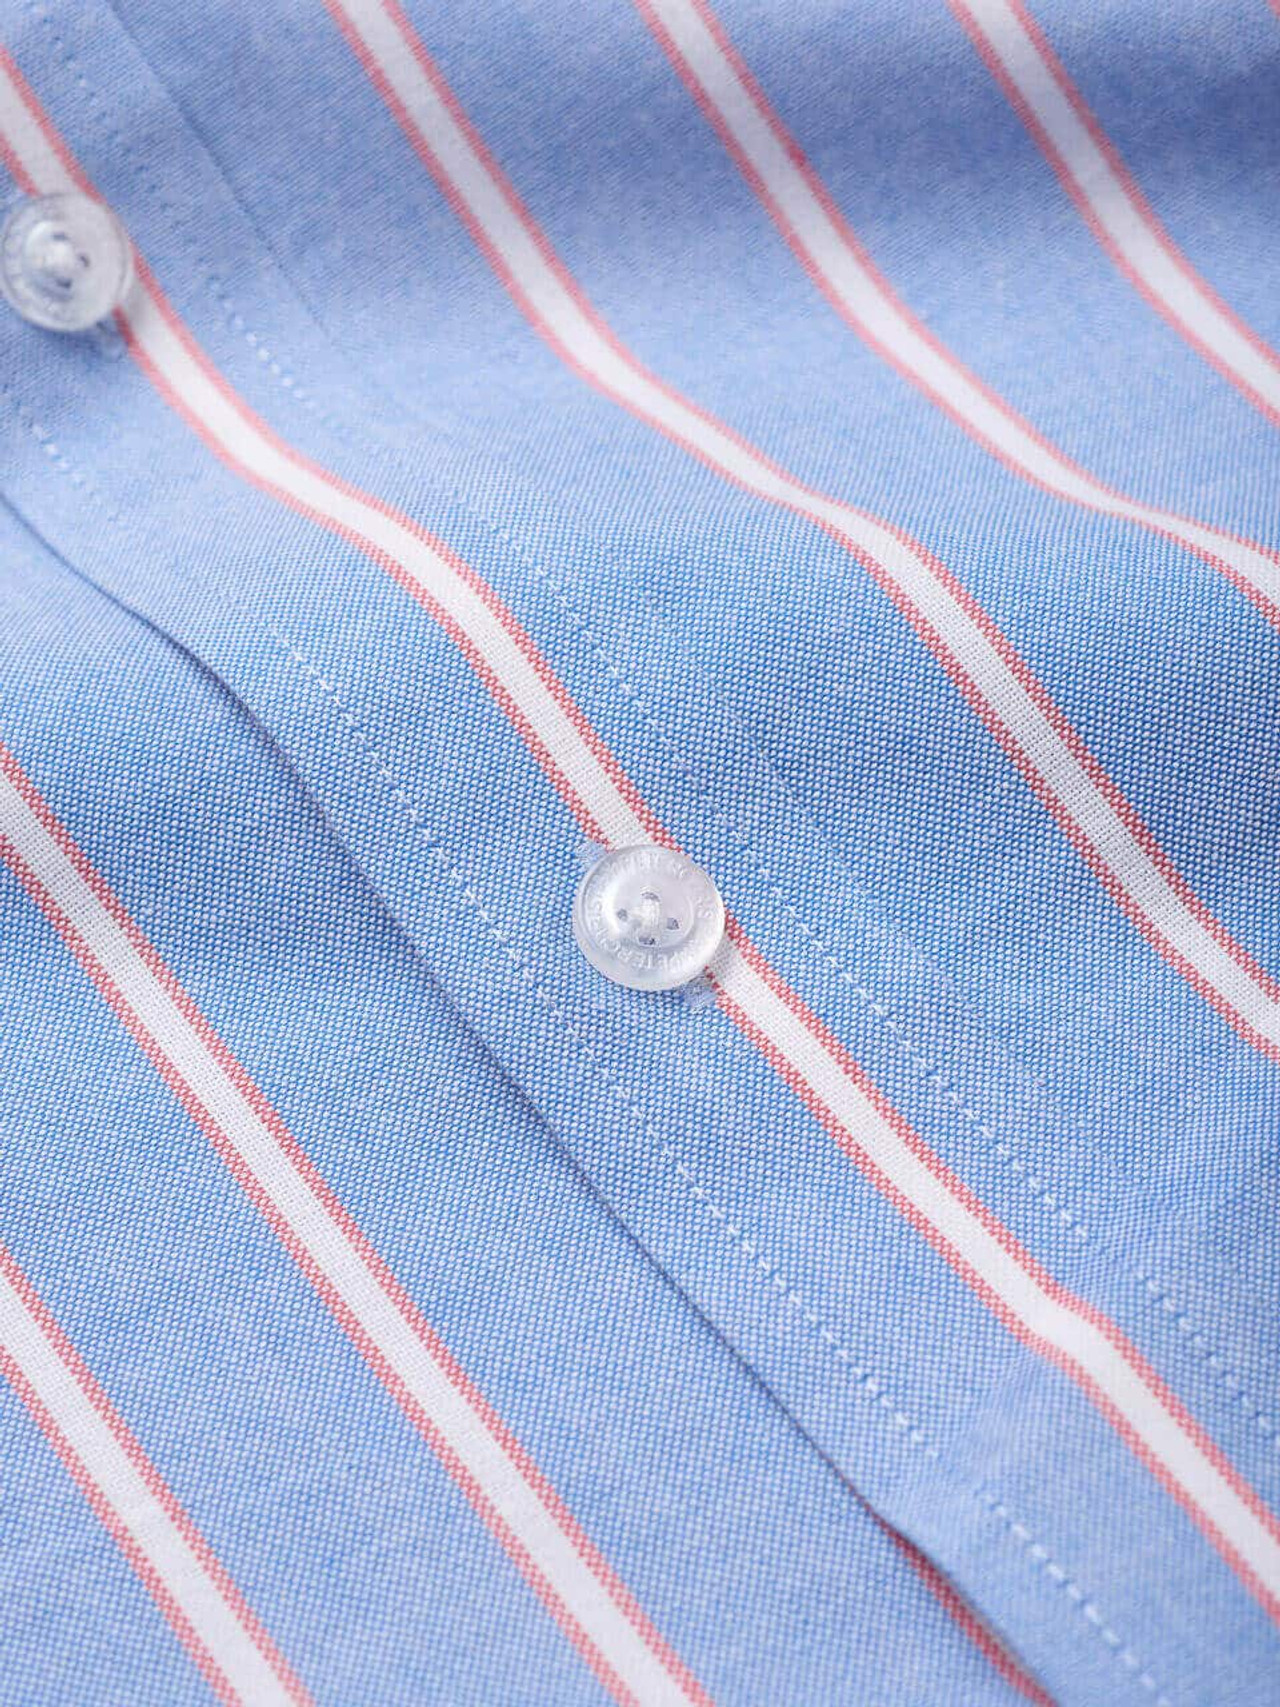 Men's Blue & Red Stripe Long Sleeve Button Down Oxford Shirt | Peter ...